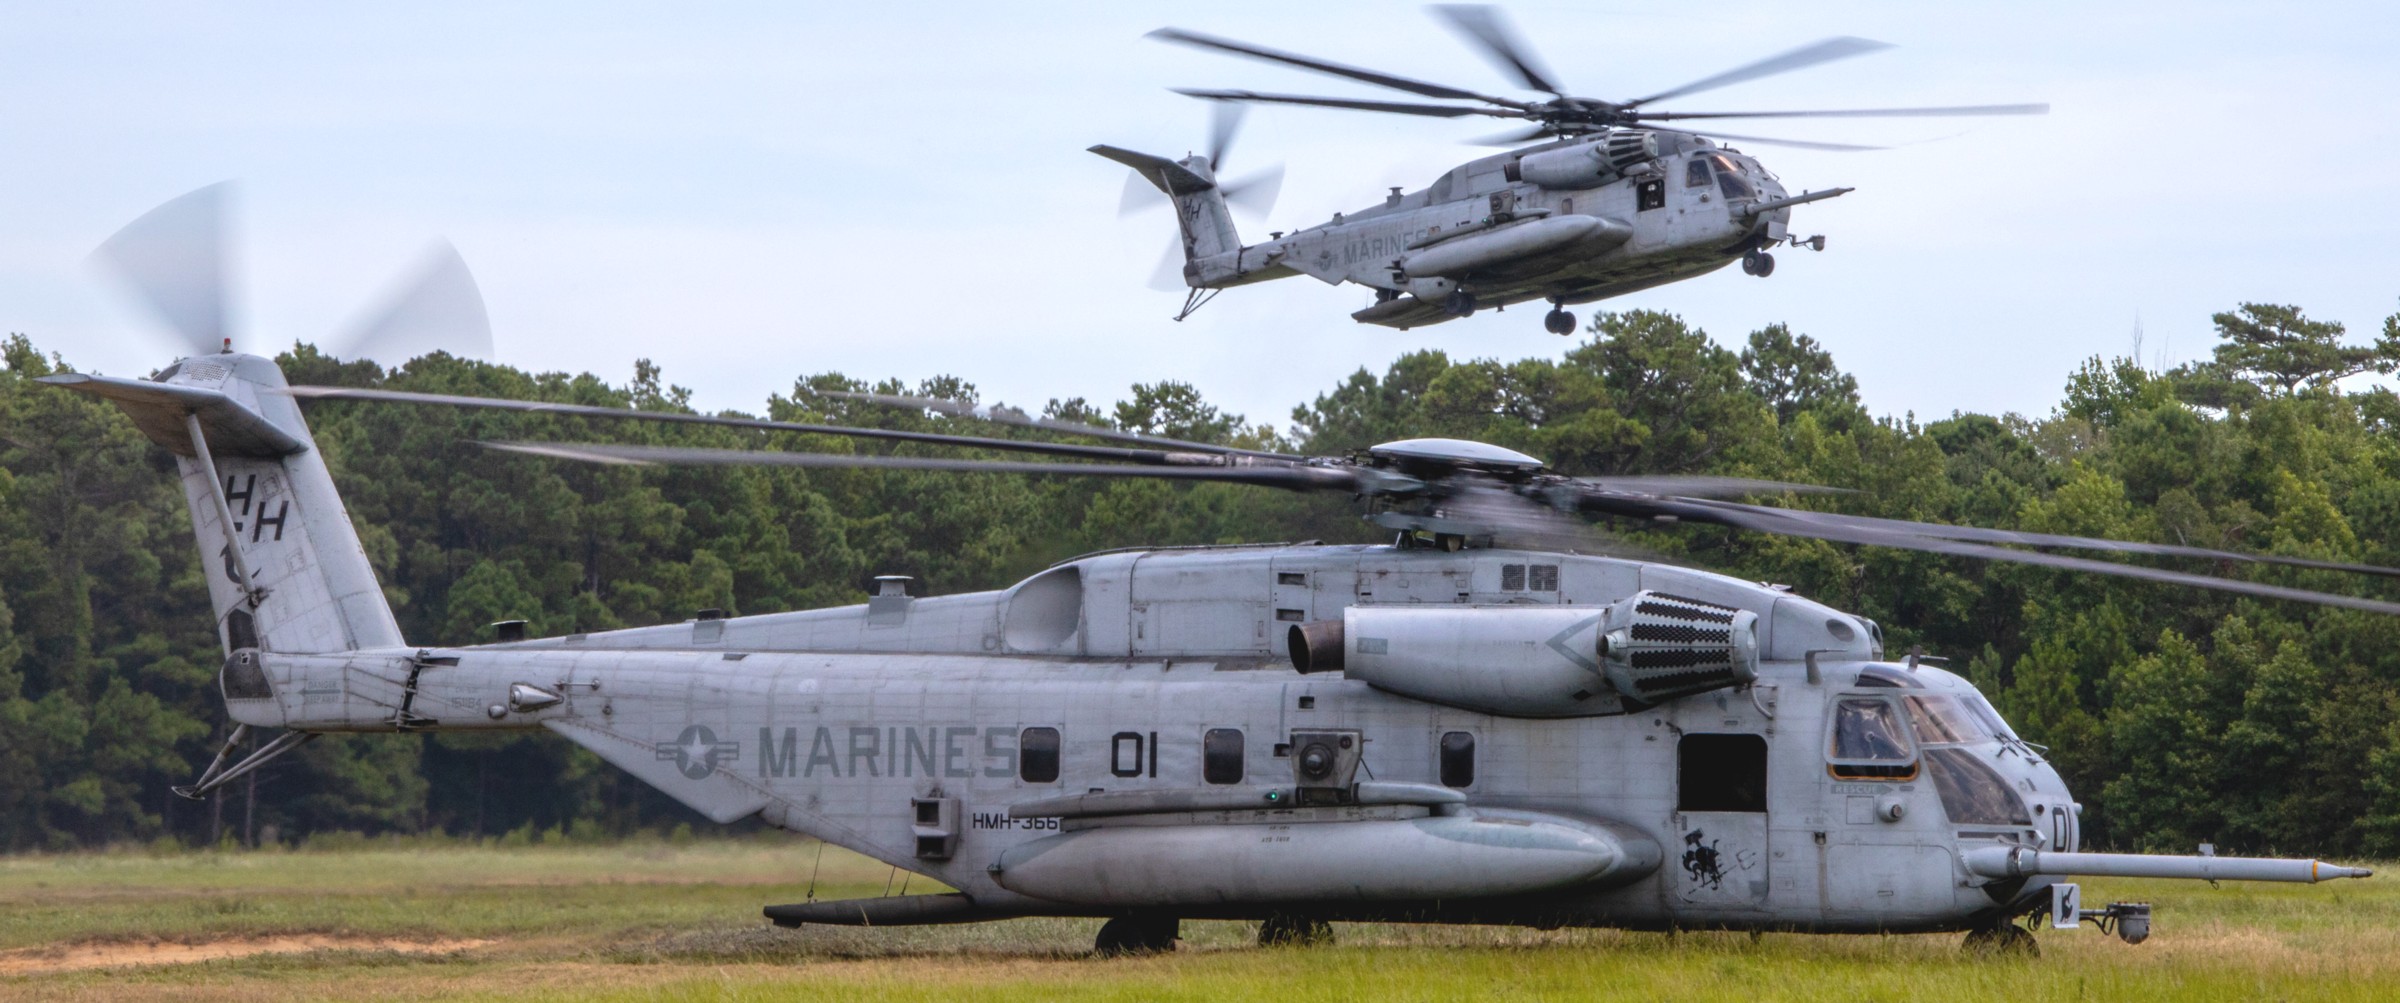 hmh-366 hammerheads ch-53e super stallion marine heavy helicopter squadron usmc camp lejeune 172